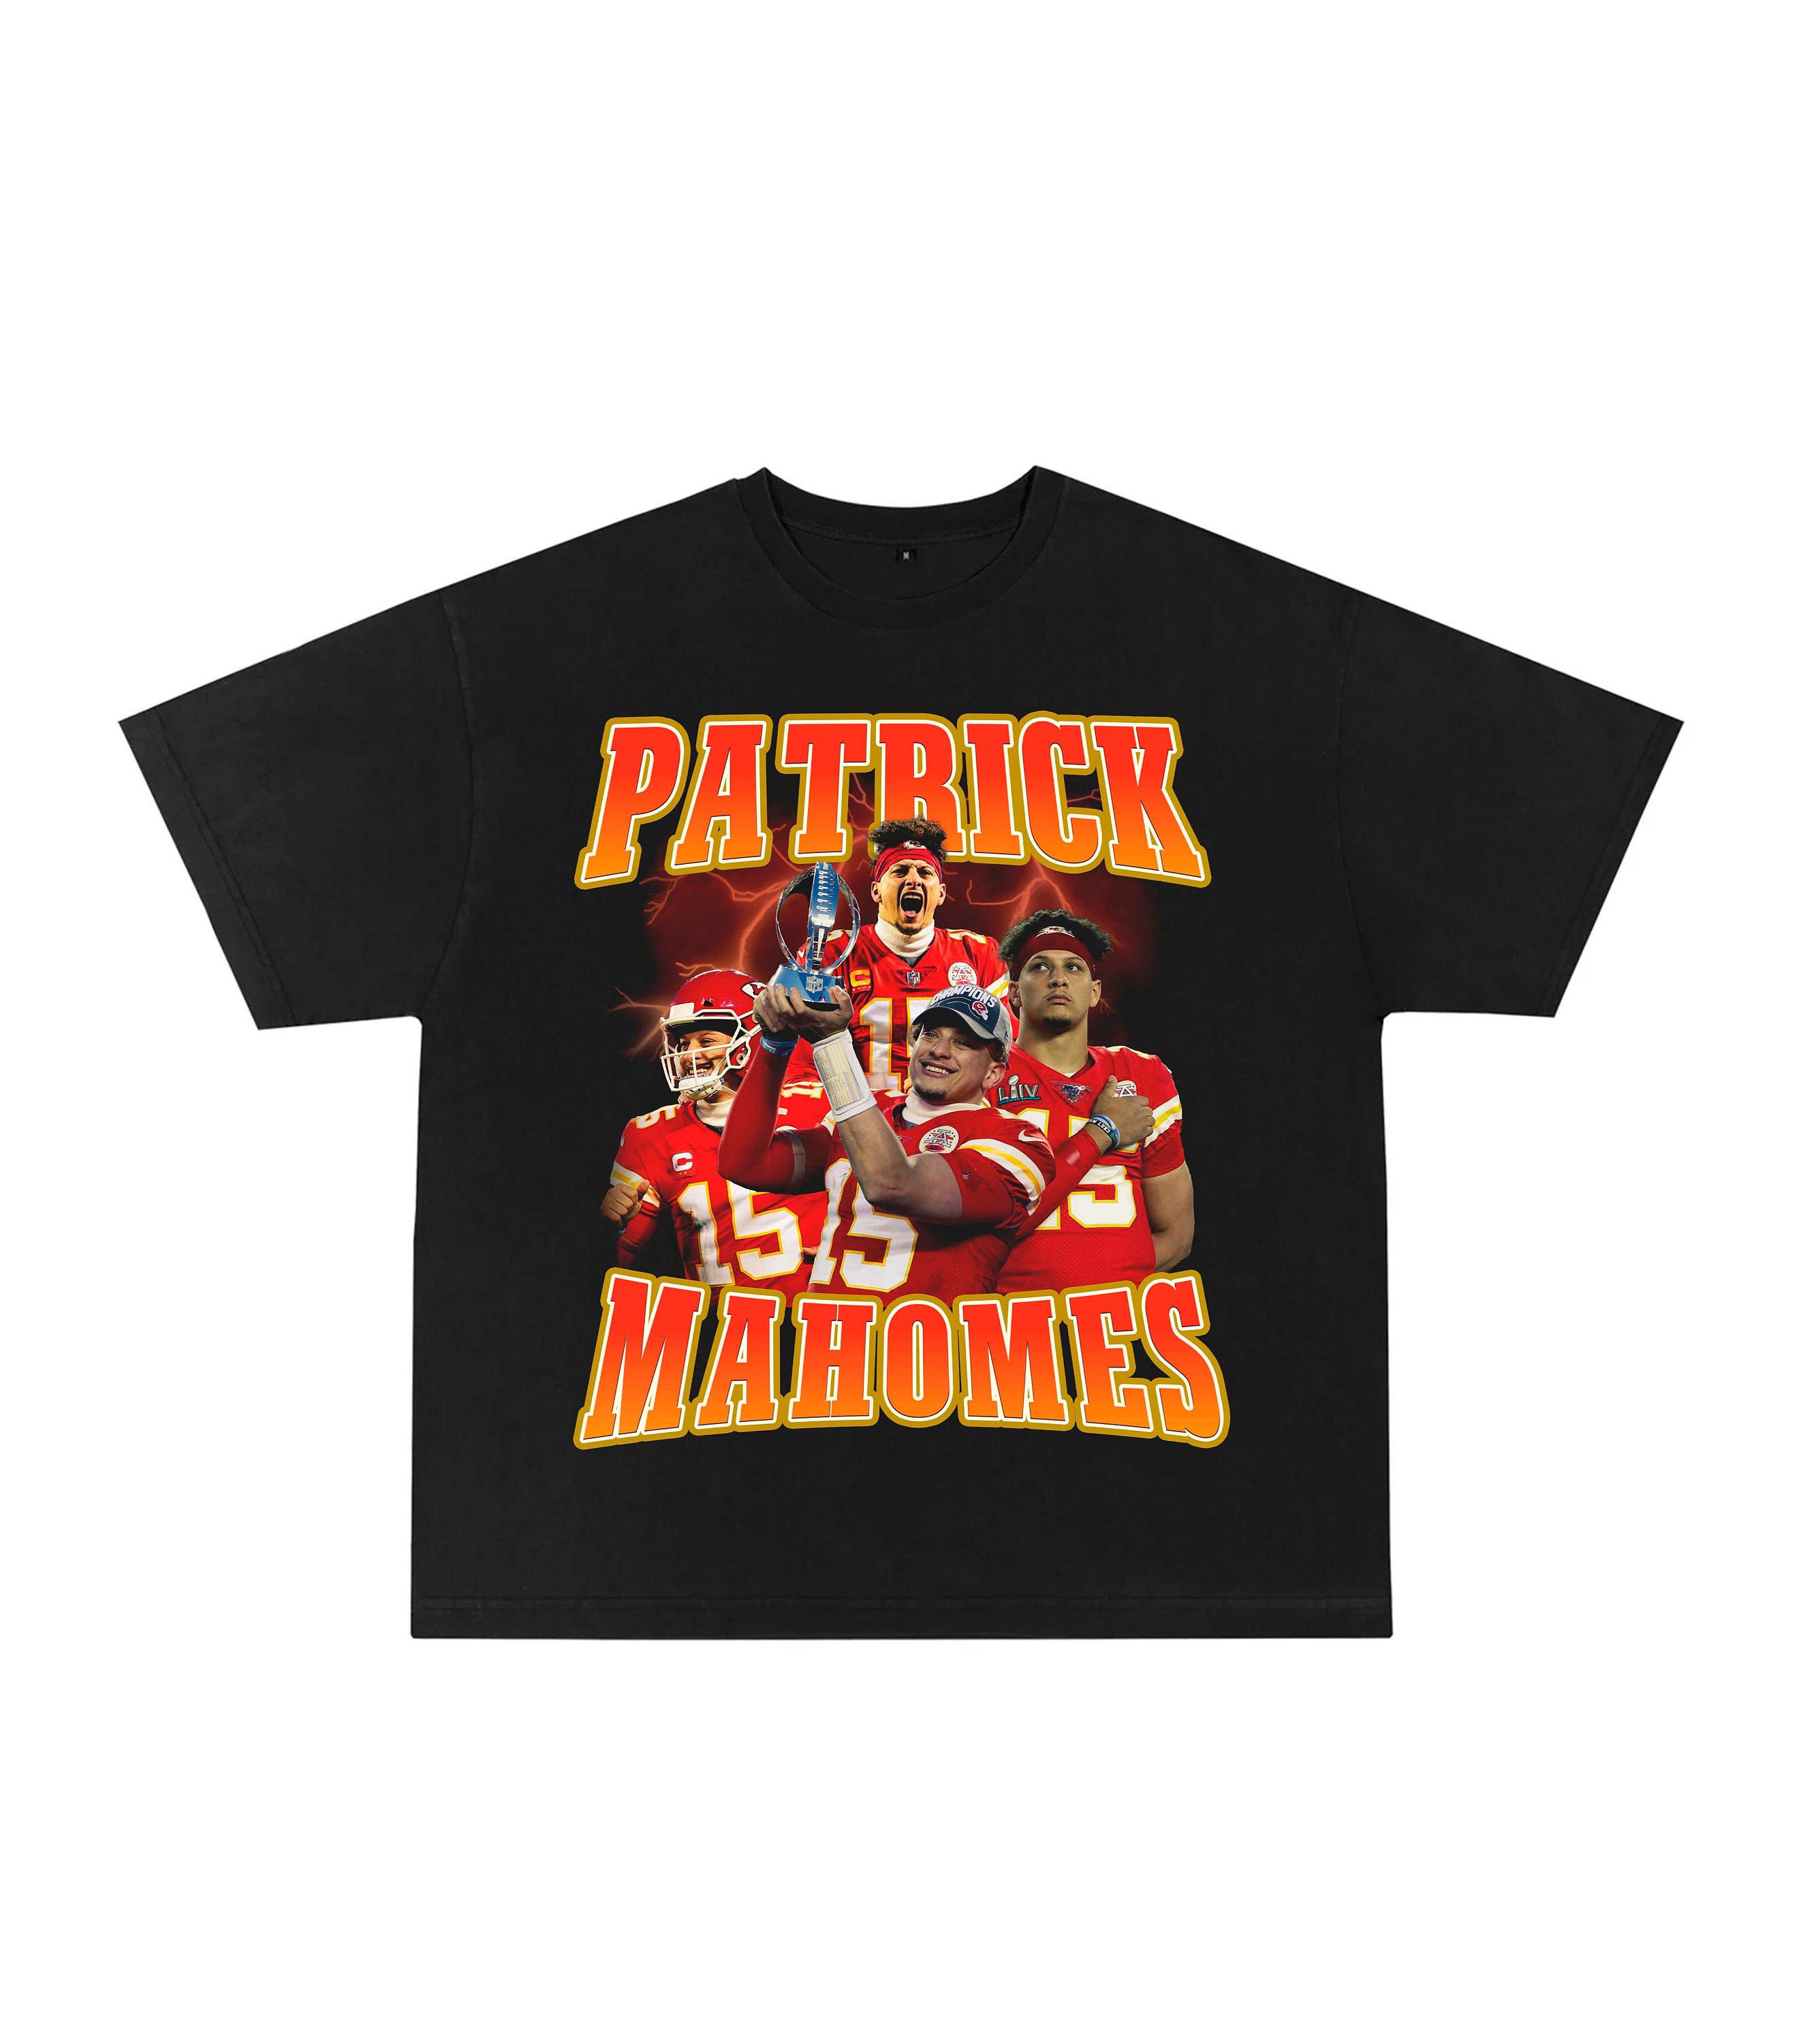 Patrick Mahomes T Shirt Design PNG Instant Download - Etsy